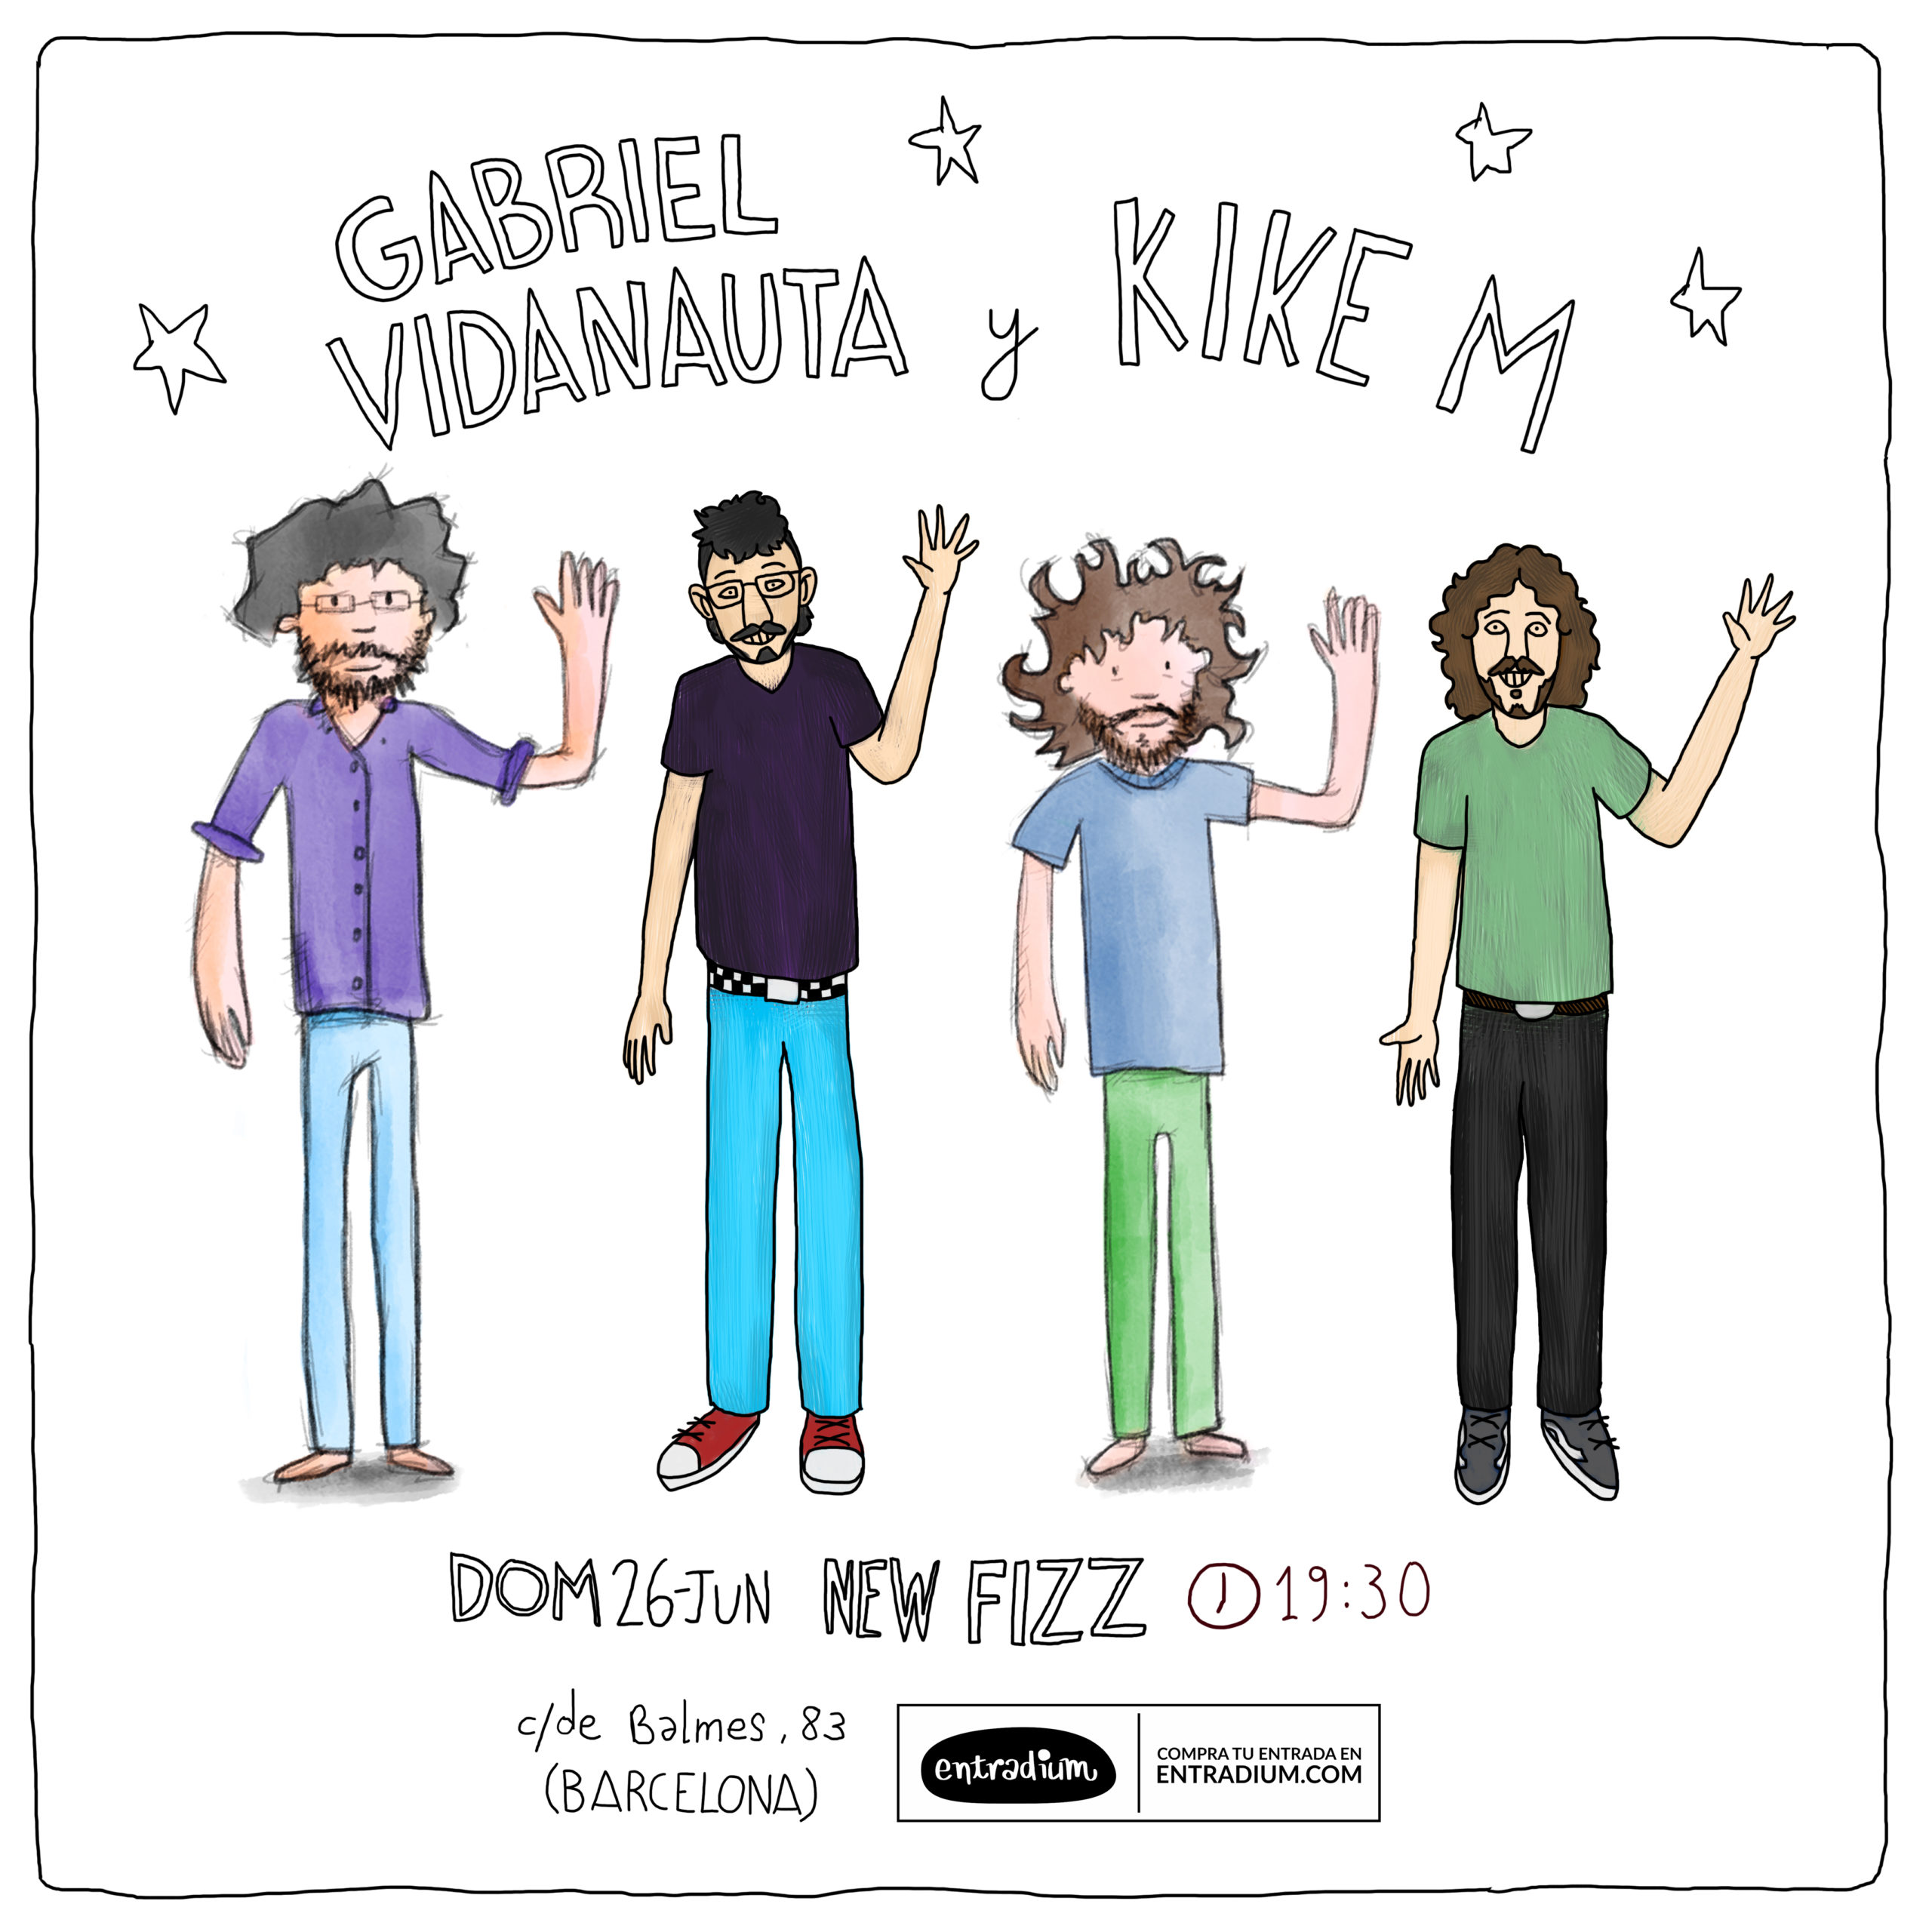 Kike M y Vidanauta concierto en la new fizz de barcelona